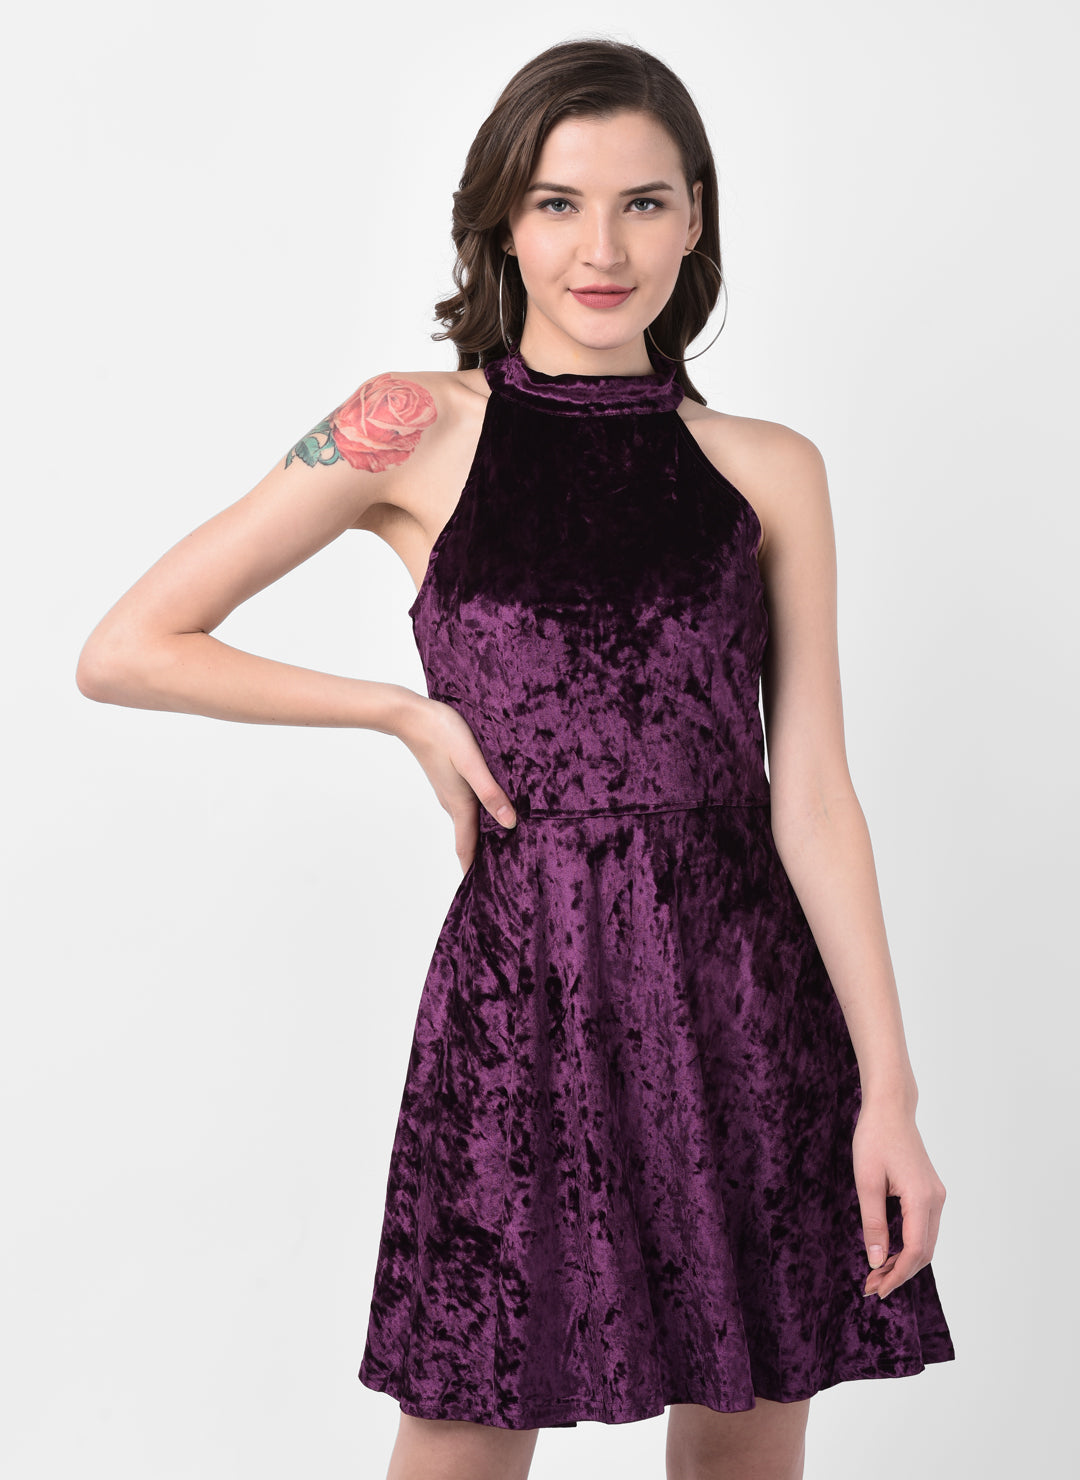 Purple Sleeveless Halter Dress